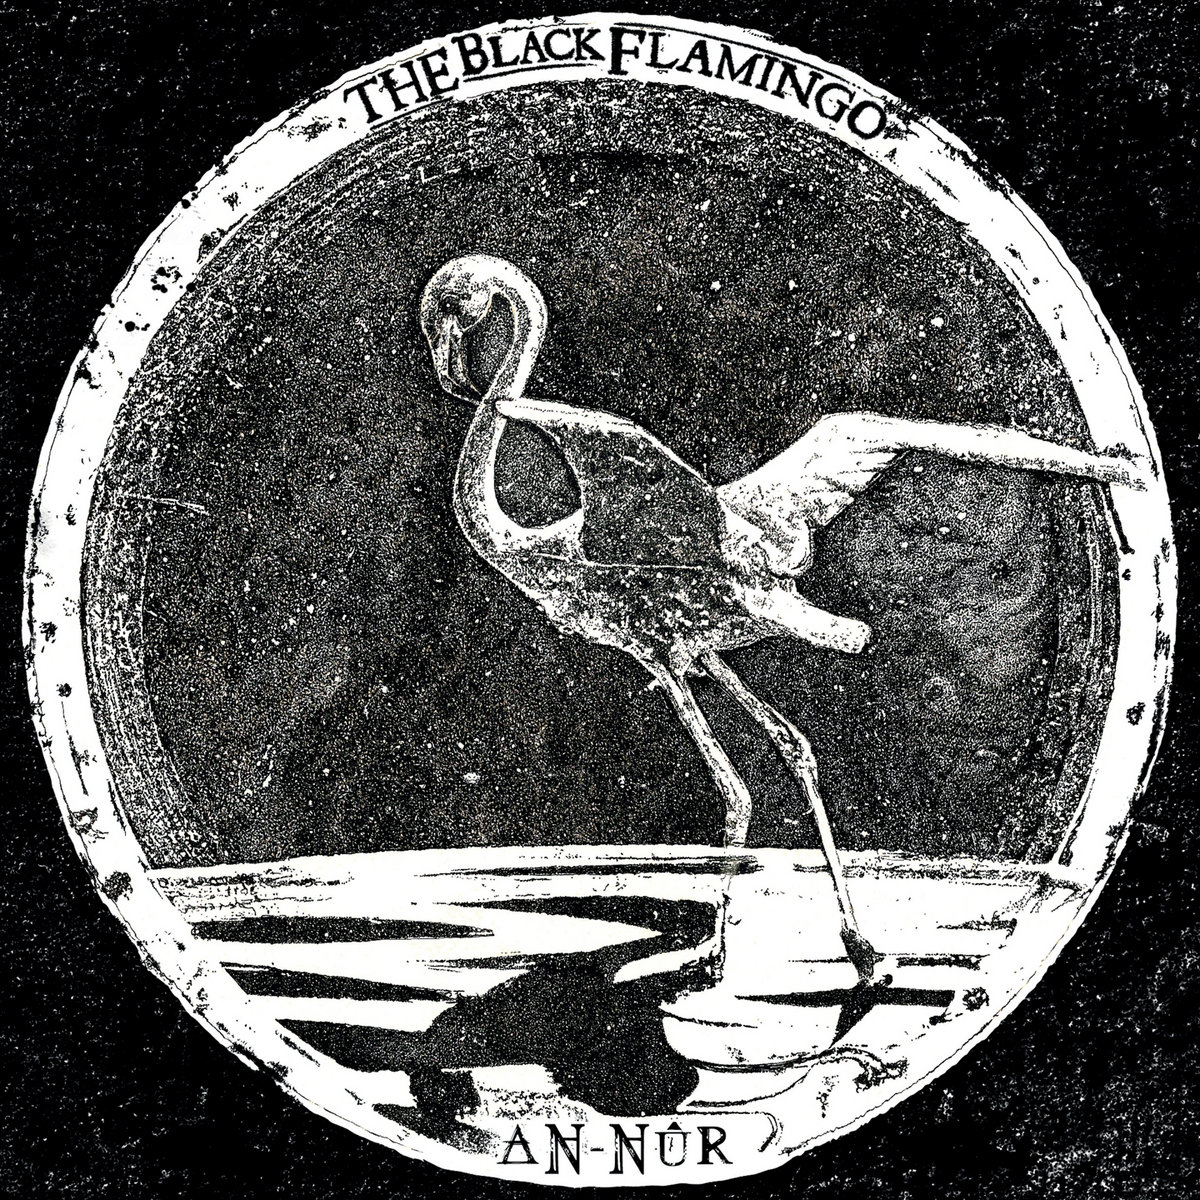 The Black Flamingo cover